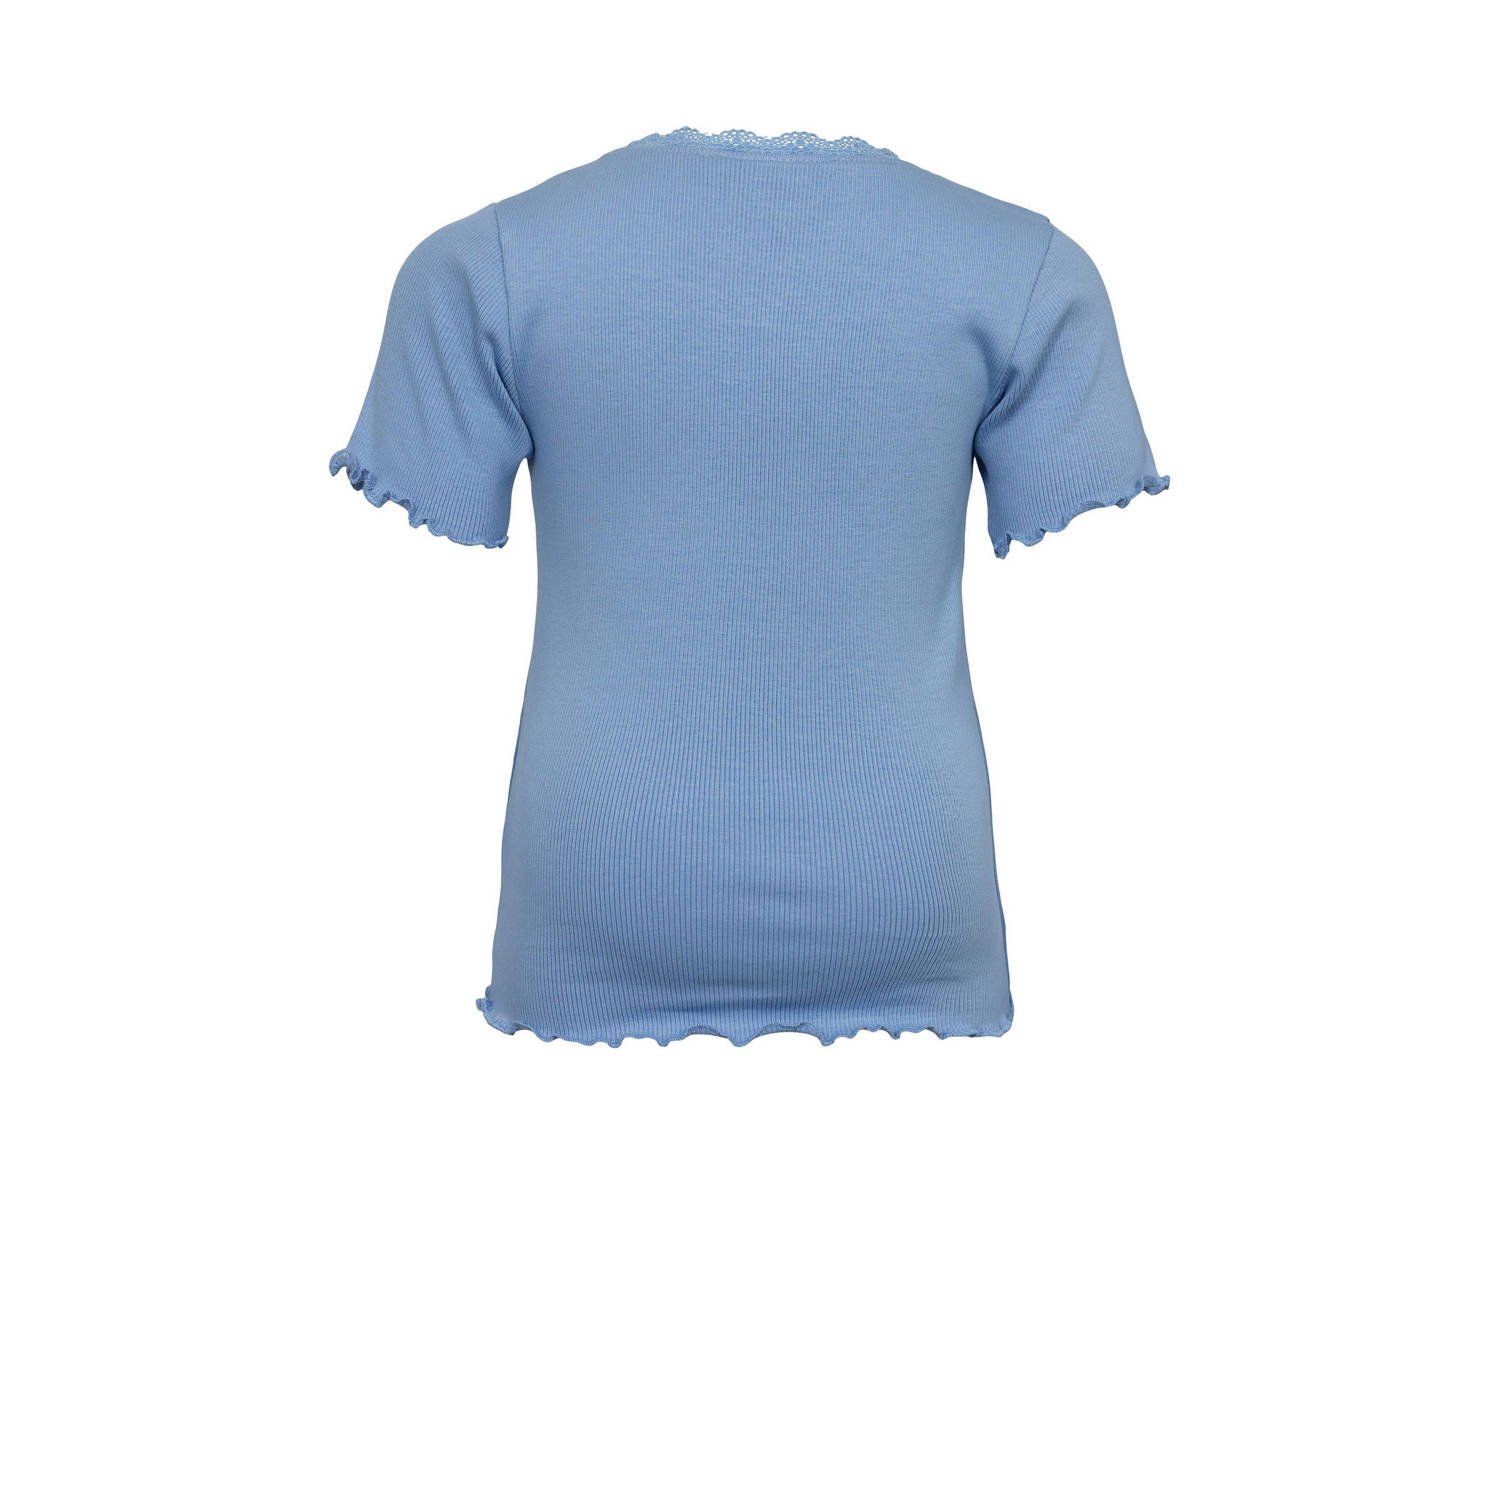 Sofie Schnoor T-shirt blauw